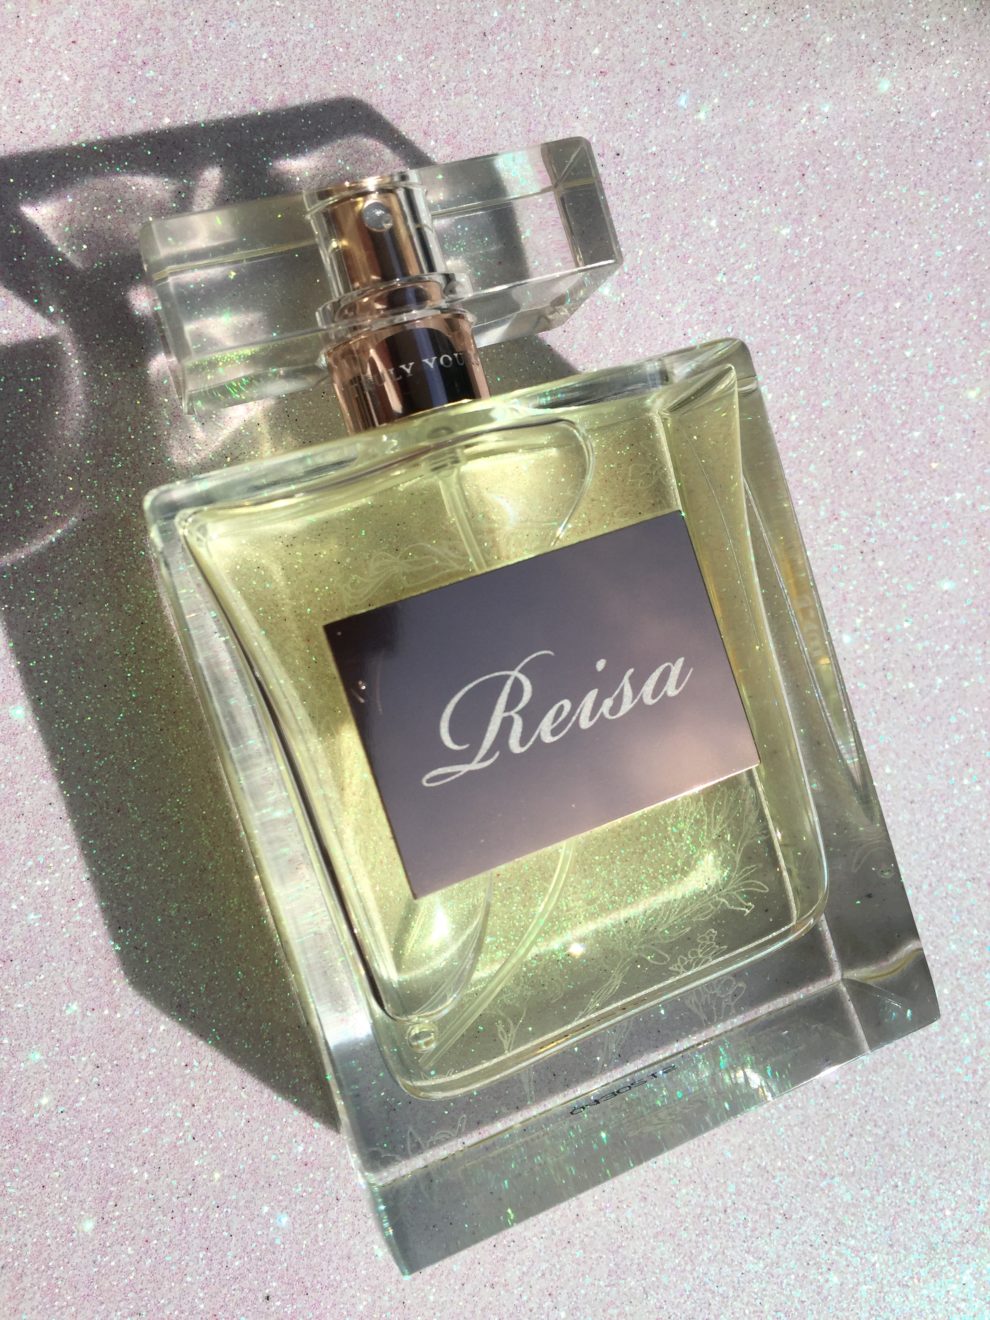 Truly Yours Reisa Perfume: I’m Addicted To This Jasmine-Tuberose Beauty